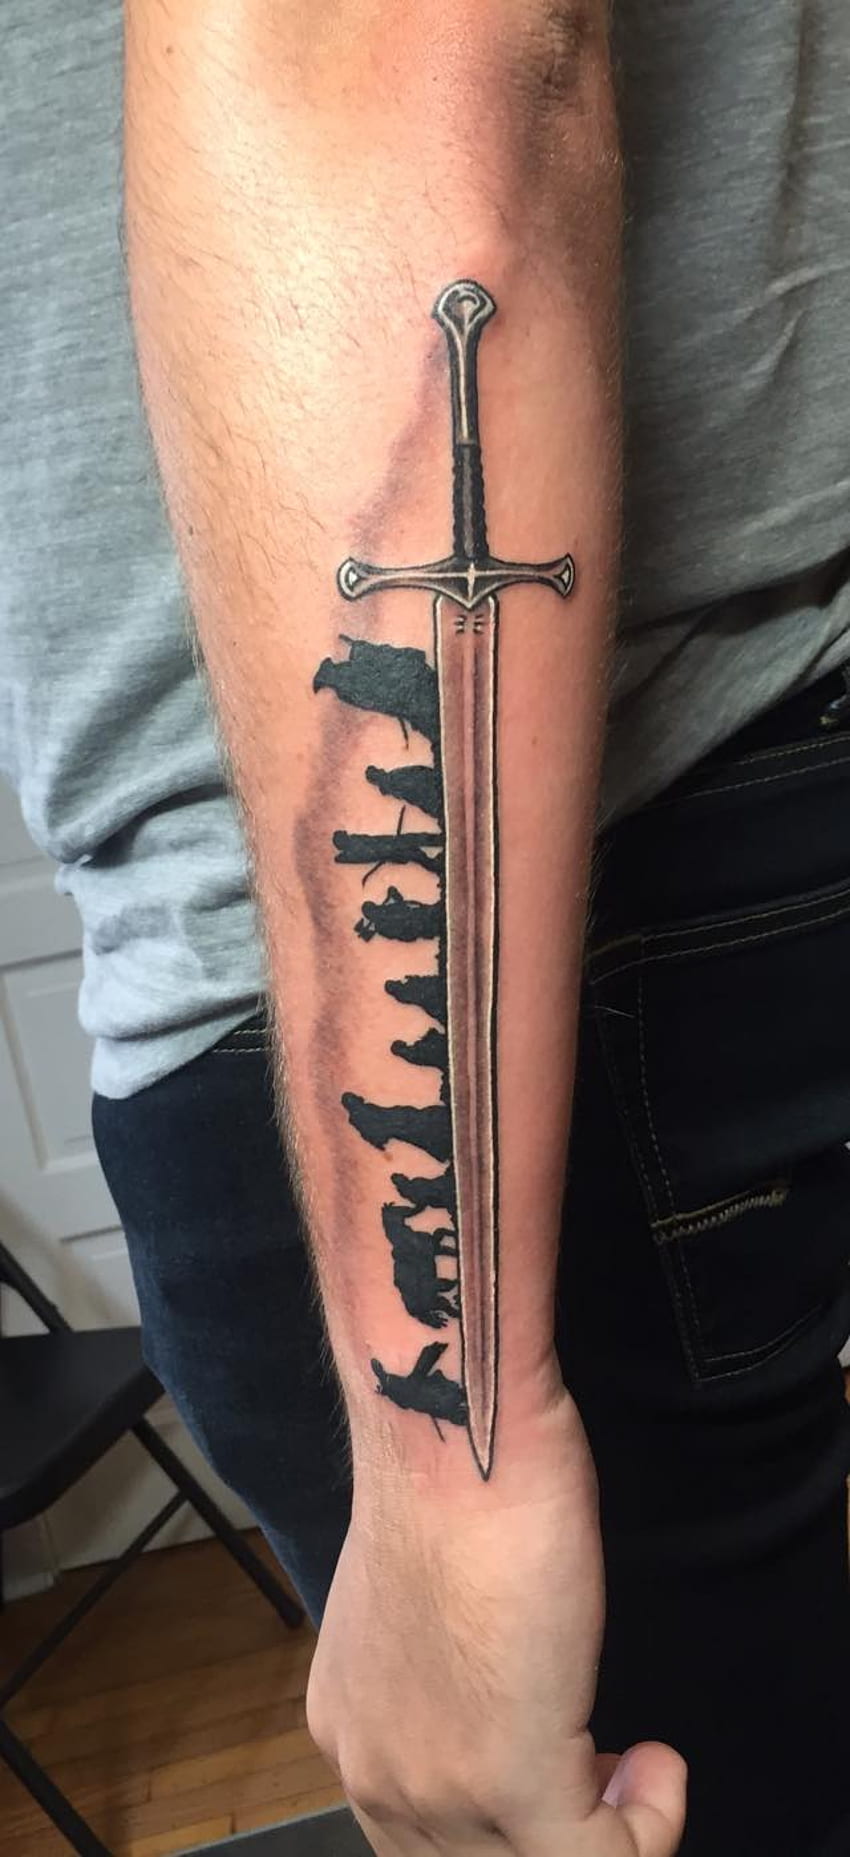 Sp000kySam on Twitter Fineline Aragorns sword from today  Blackwork  tattoos all day baby httpstcox0WmCpFbfr  Twitter